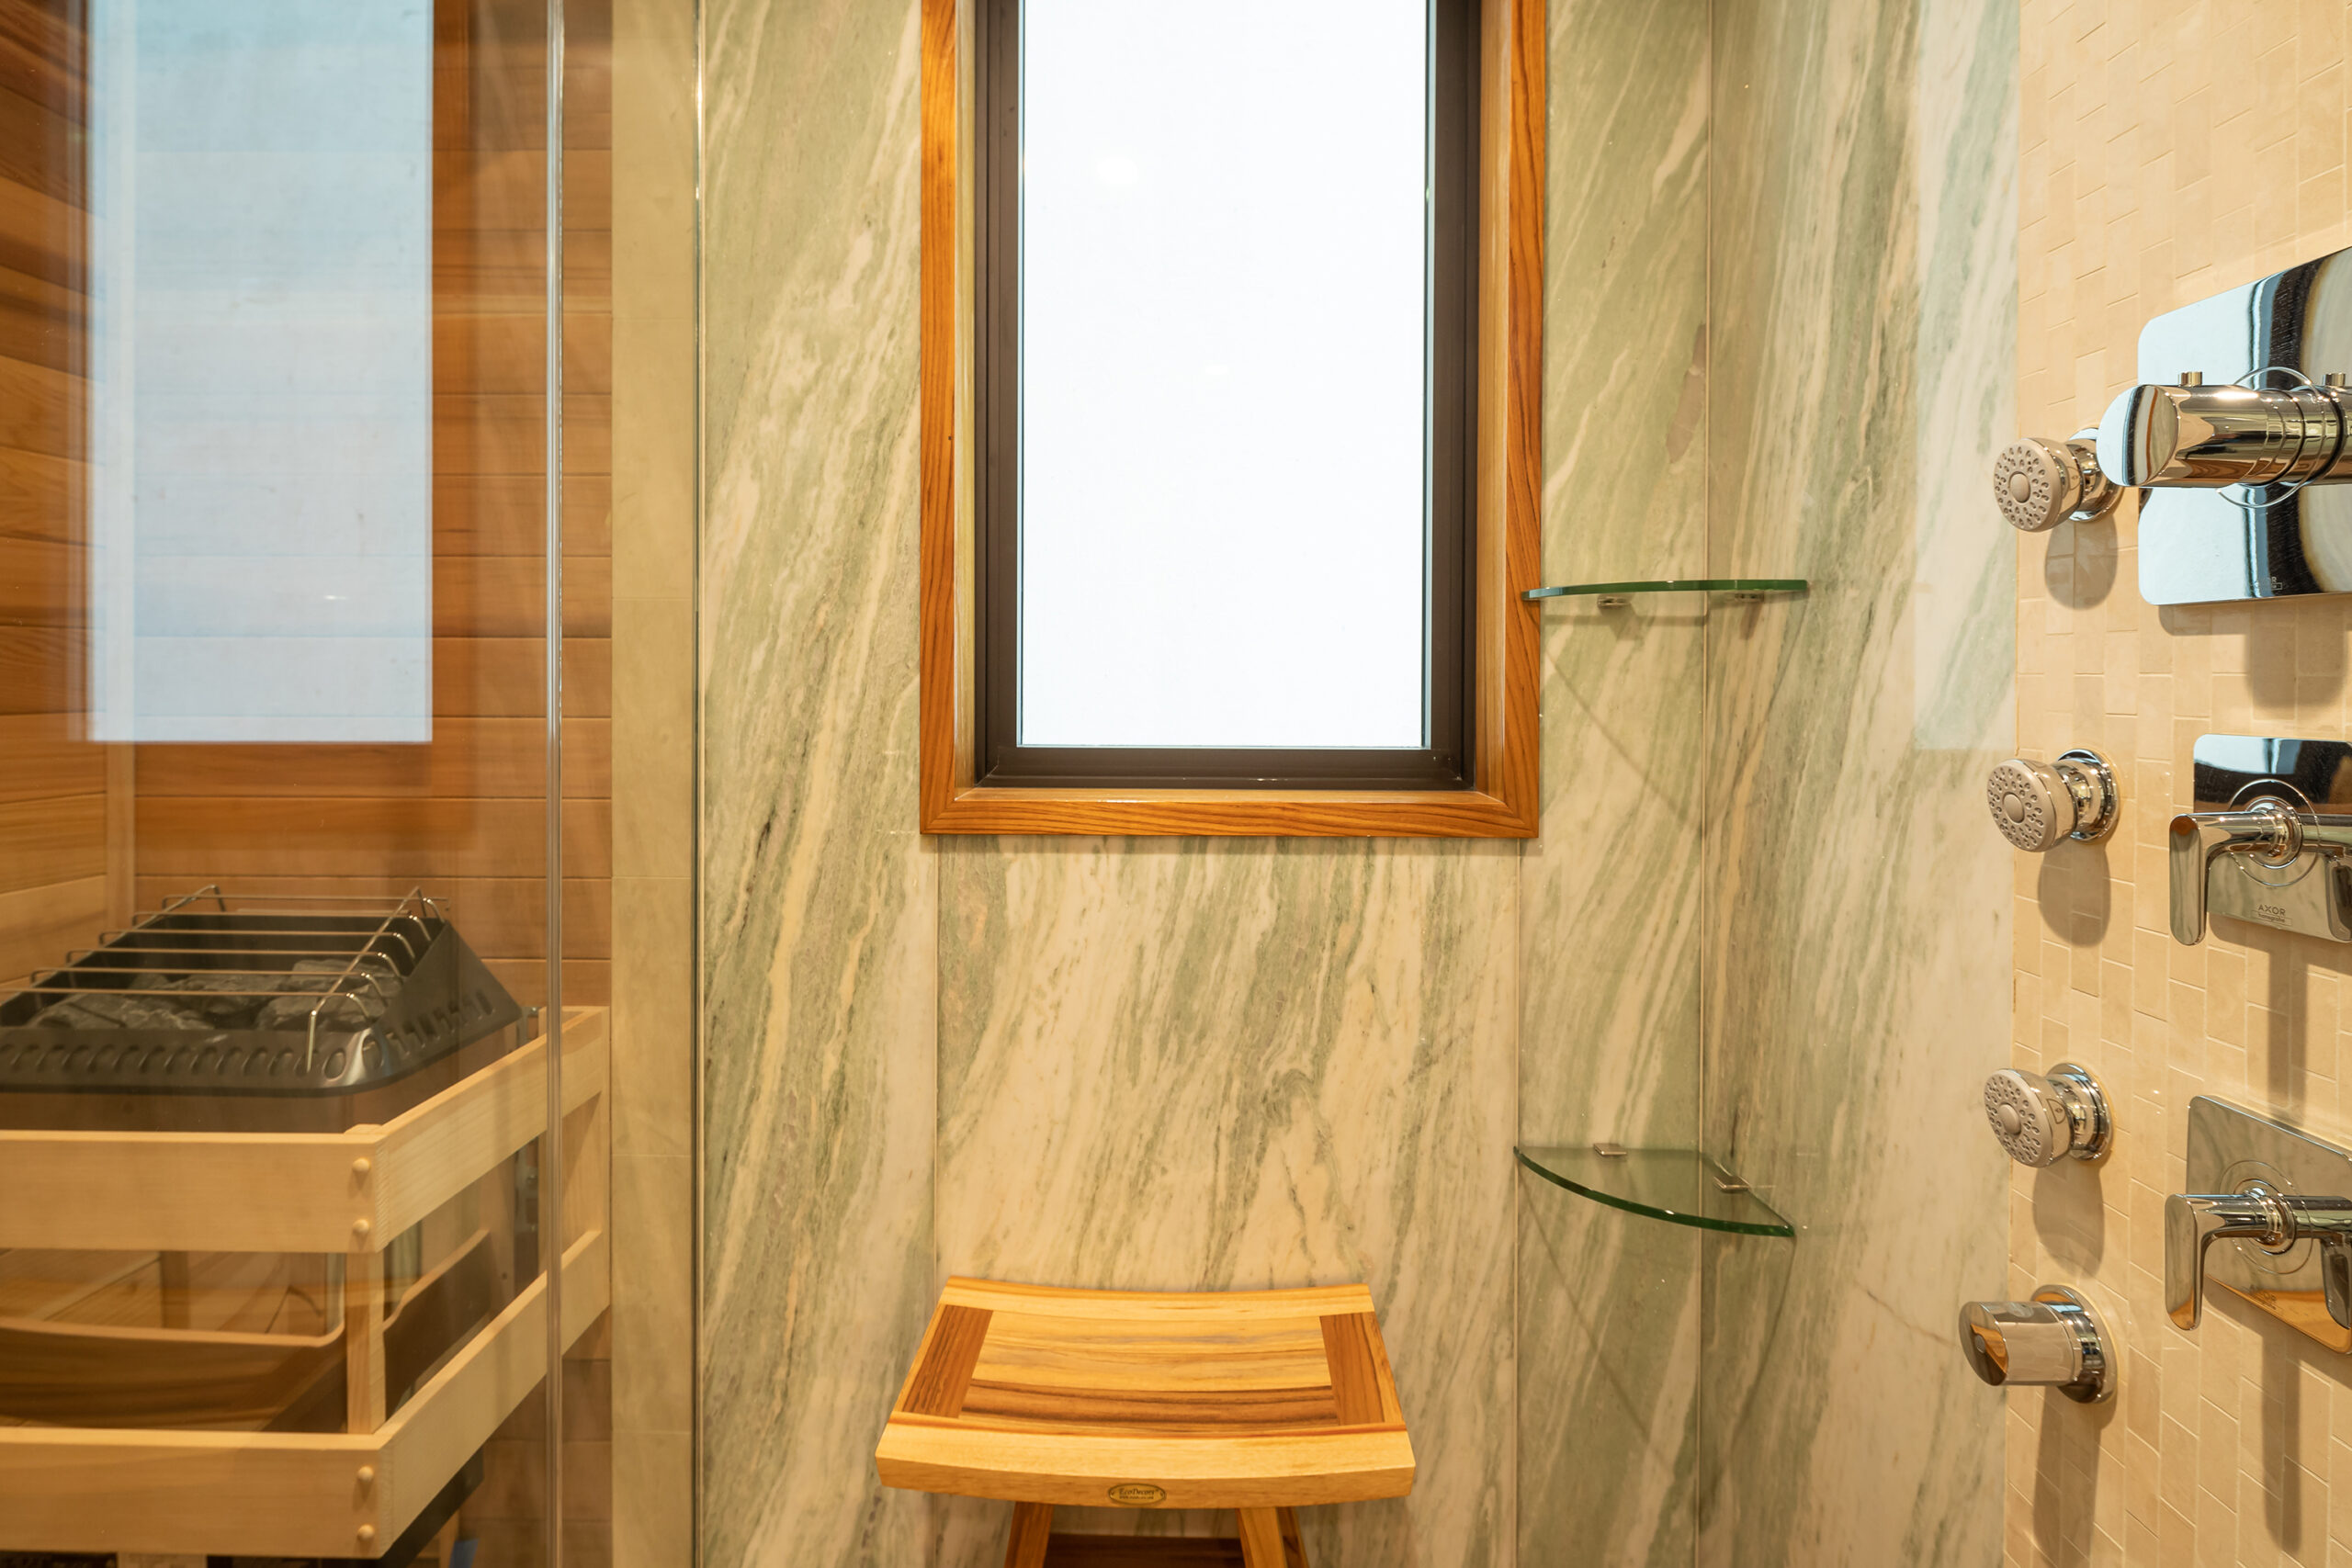 Marble shower with sauna.